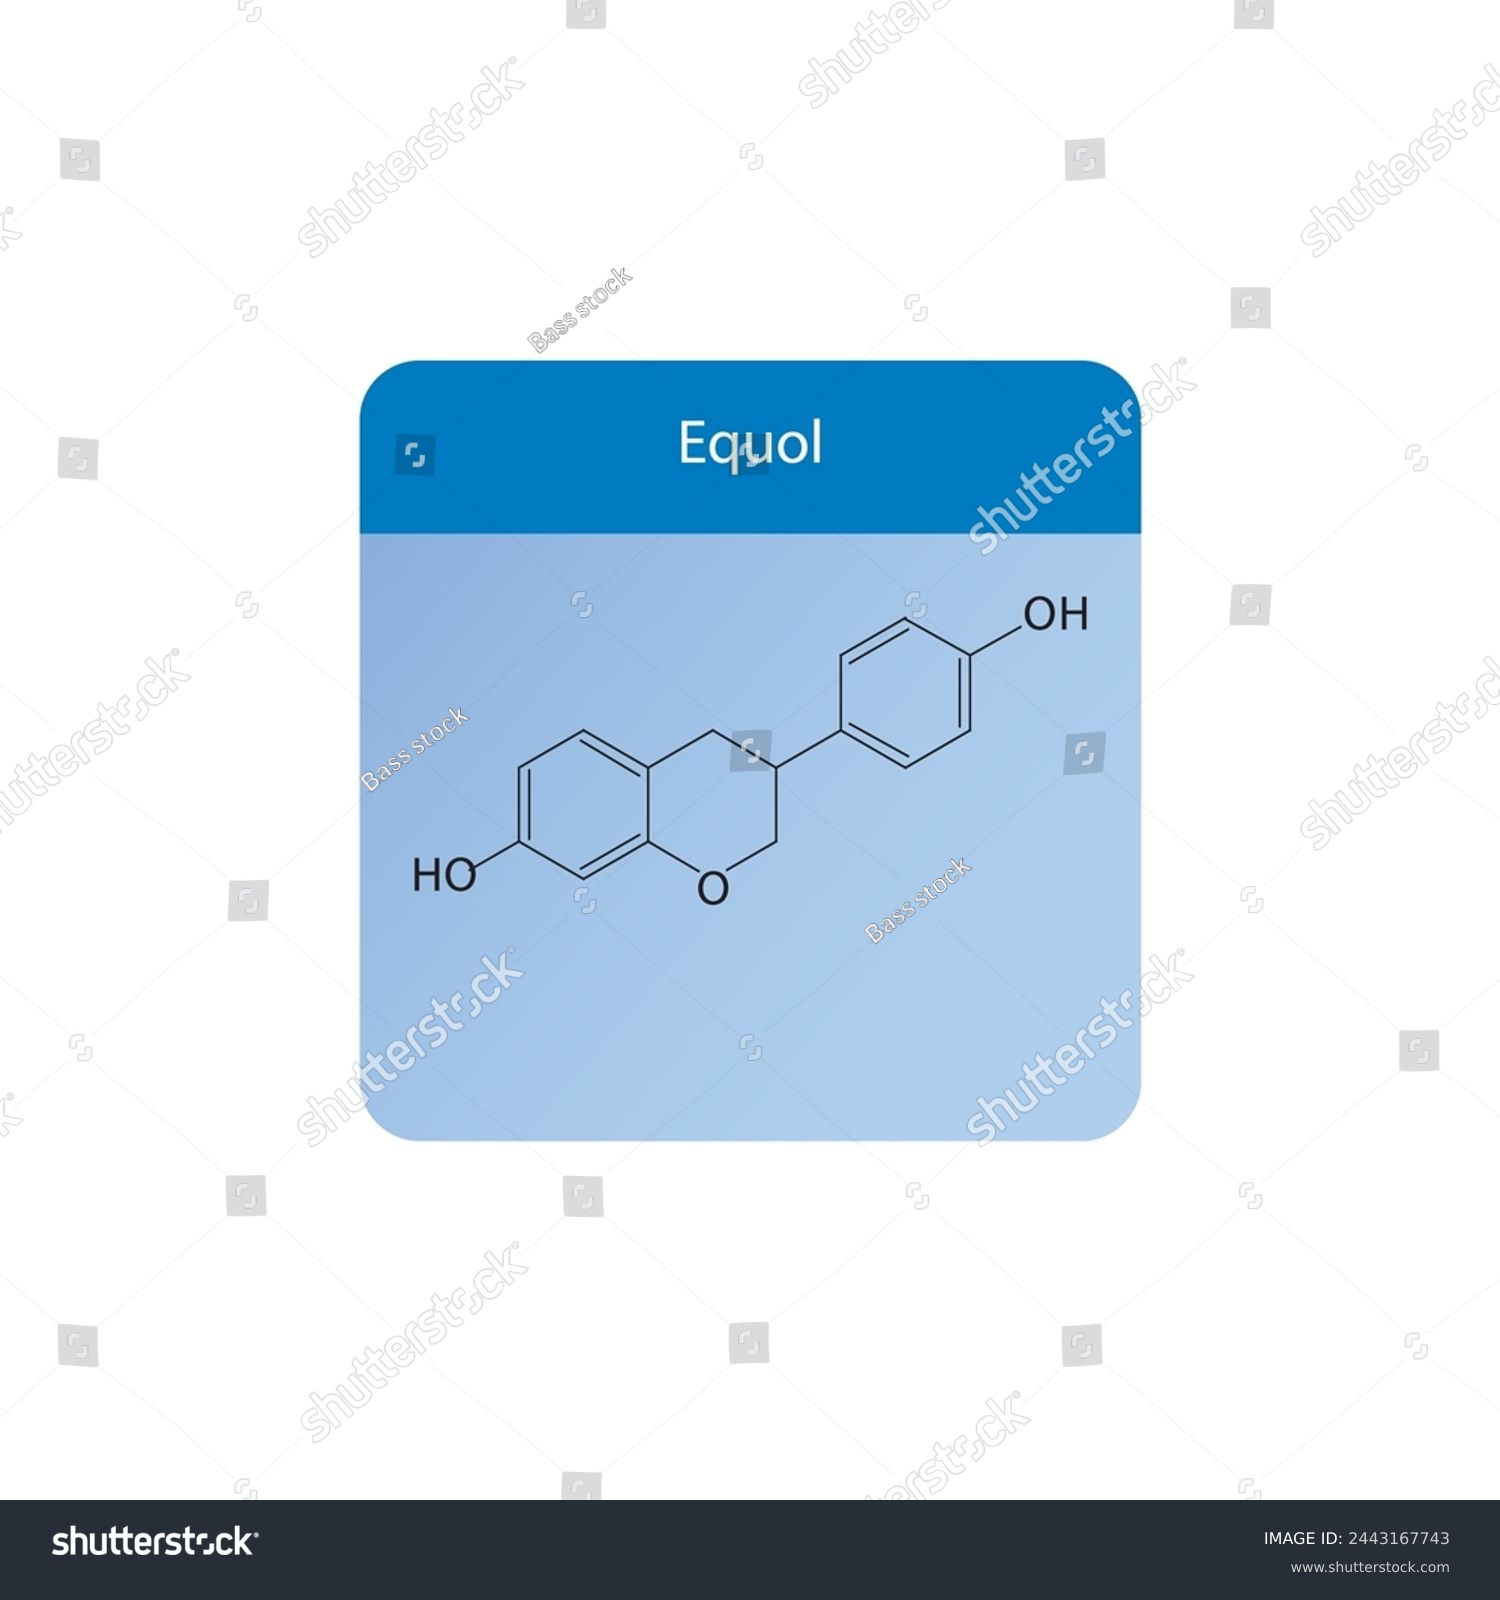 SVG of Equol skeletal structure diagram.Isoflavanone compound molecule scientific illustration on blue background. svg